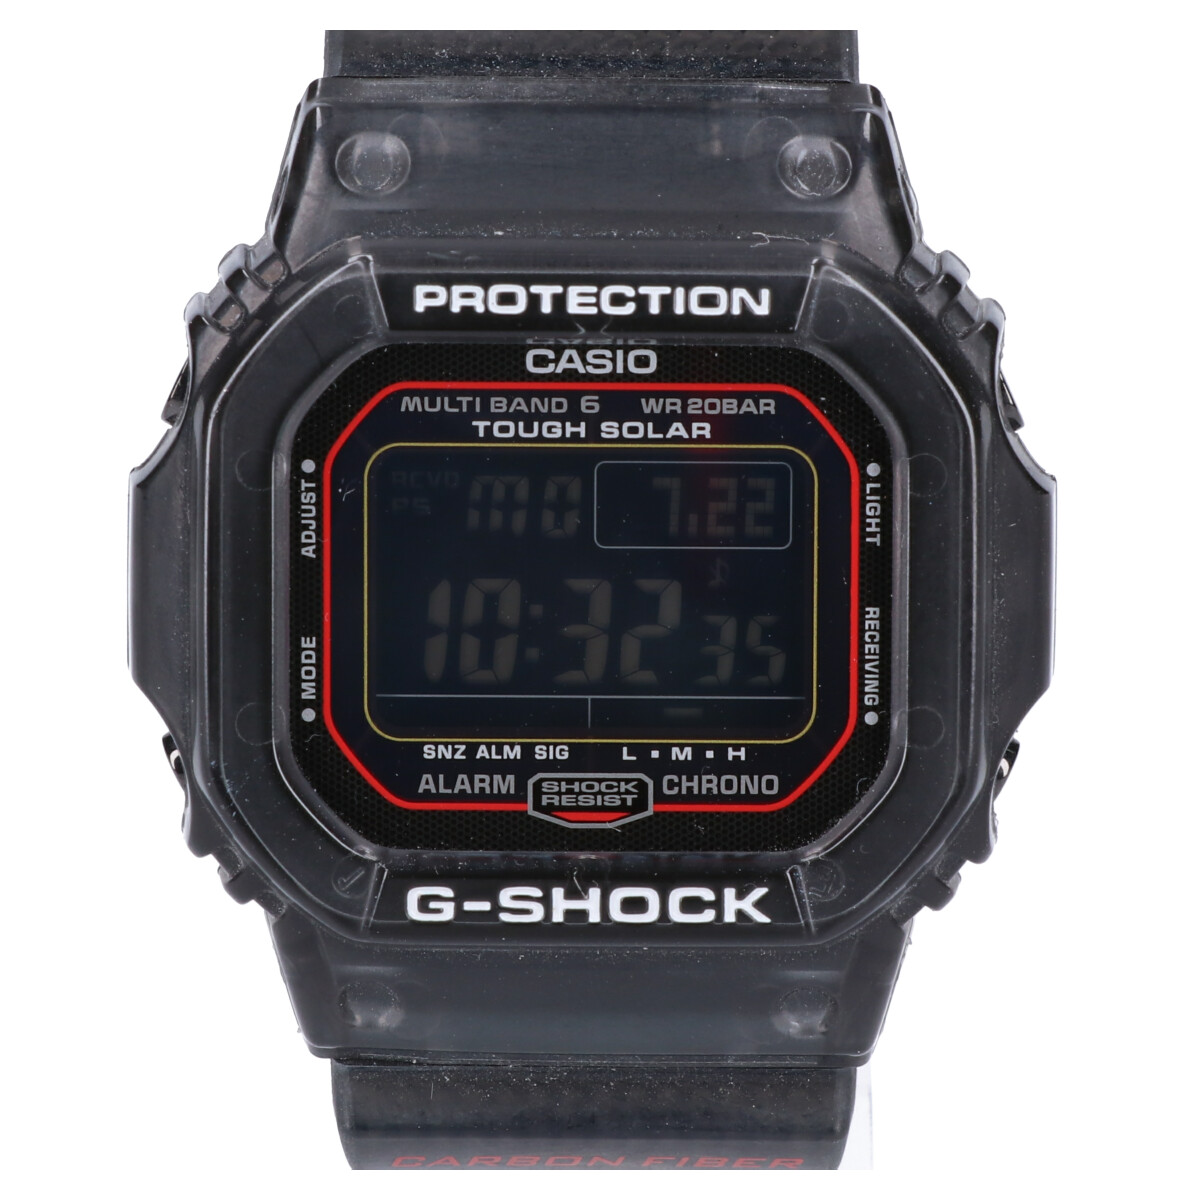 G-SHOCKのGW-S5600B-1JF RM Series マルチバンド6 タフソーラー電波腕時計の買取実績です。